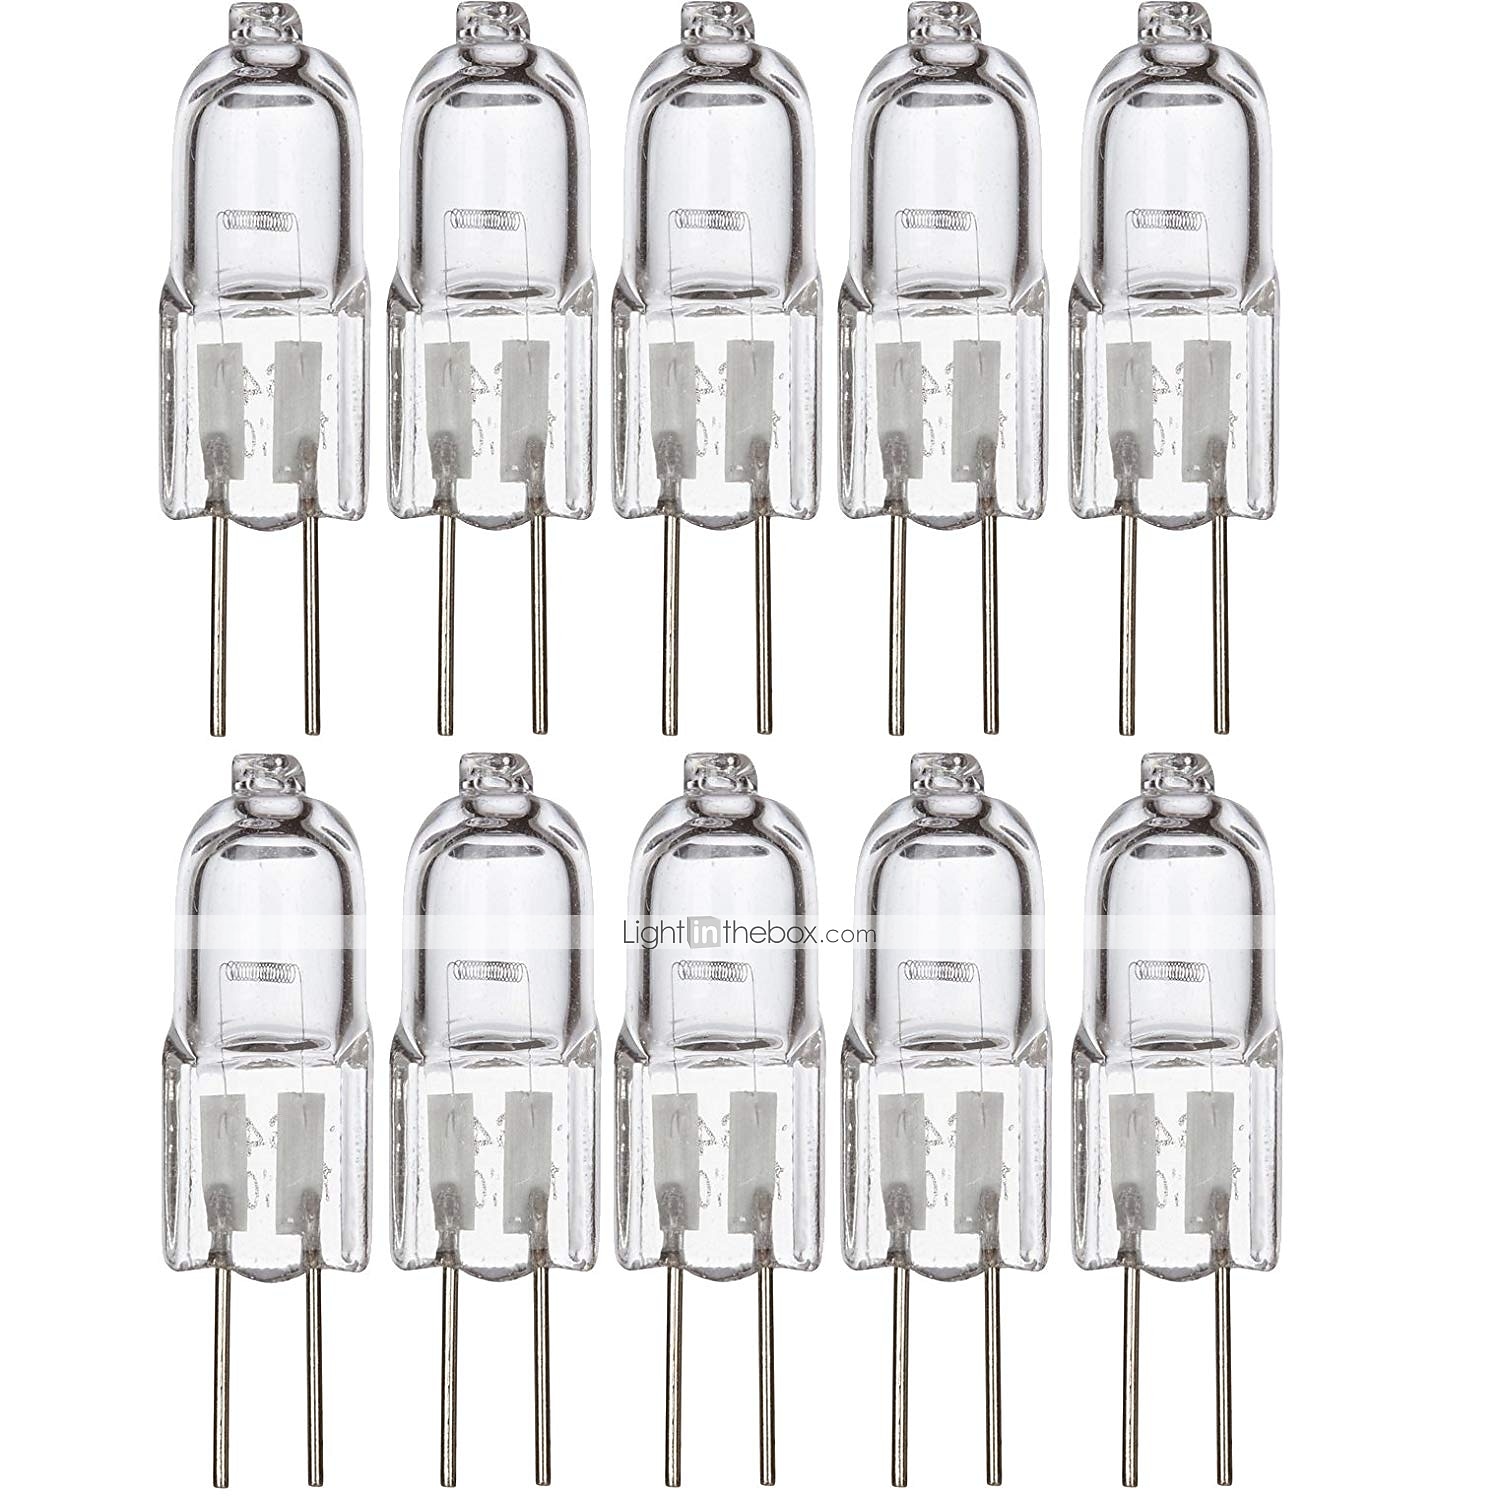 20PCS G4 Mini Warm White Energy Saving Lights Halogen Bulbs Jc Type Lamp 20W 12v 